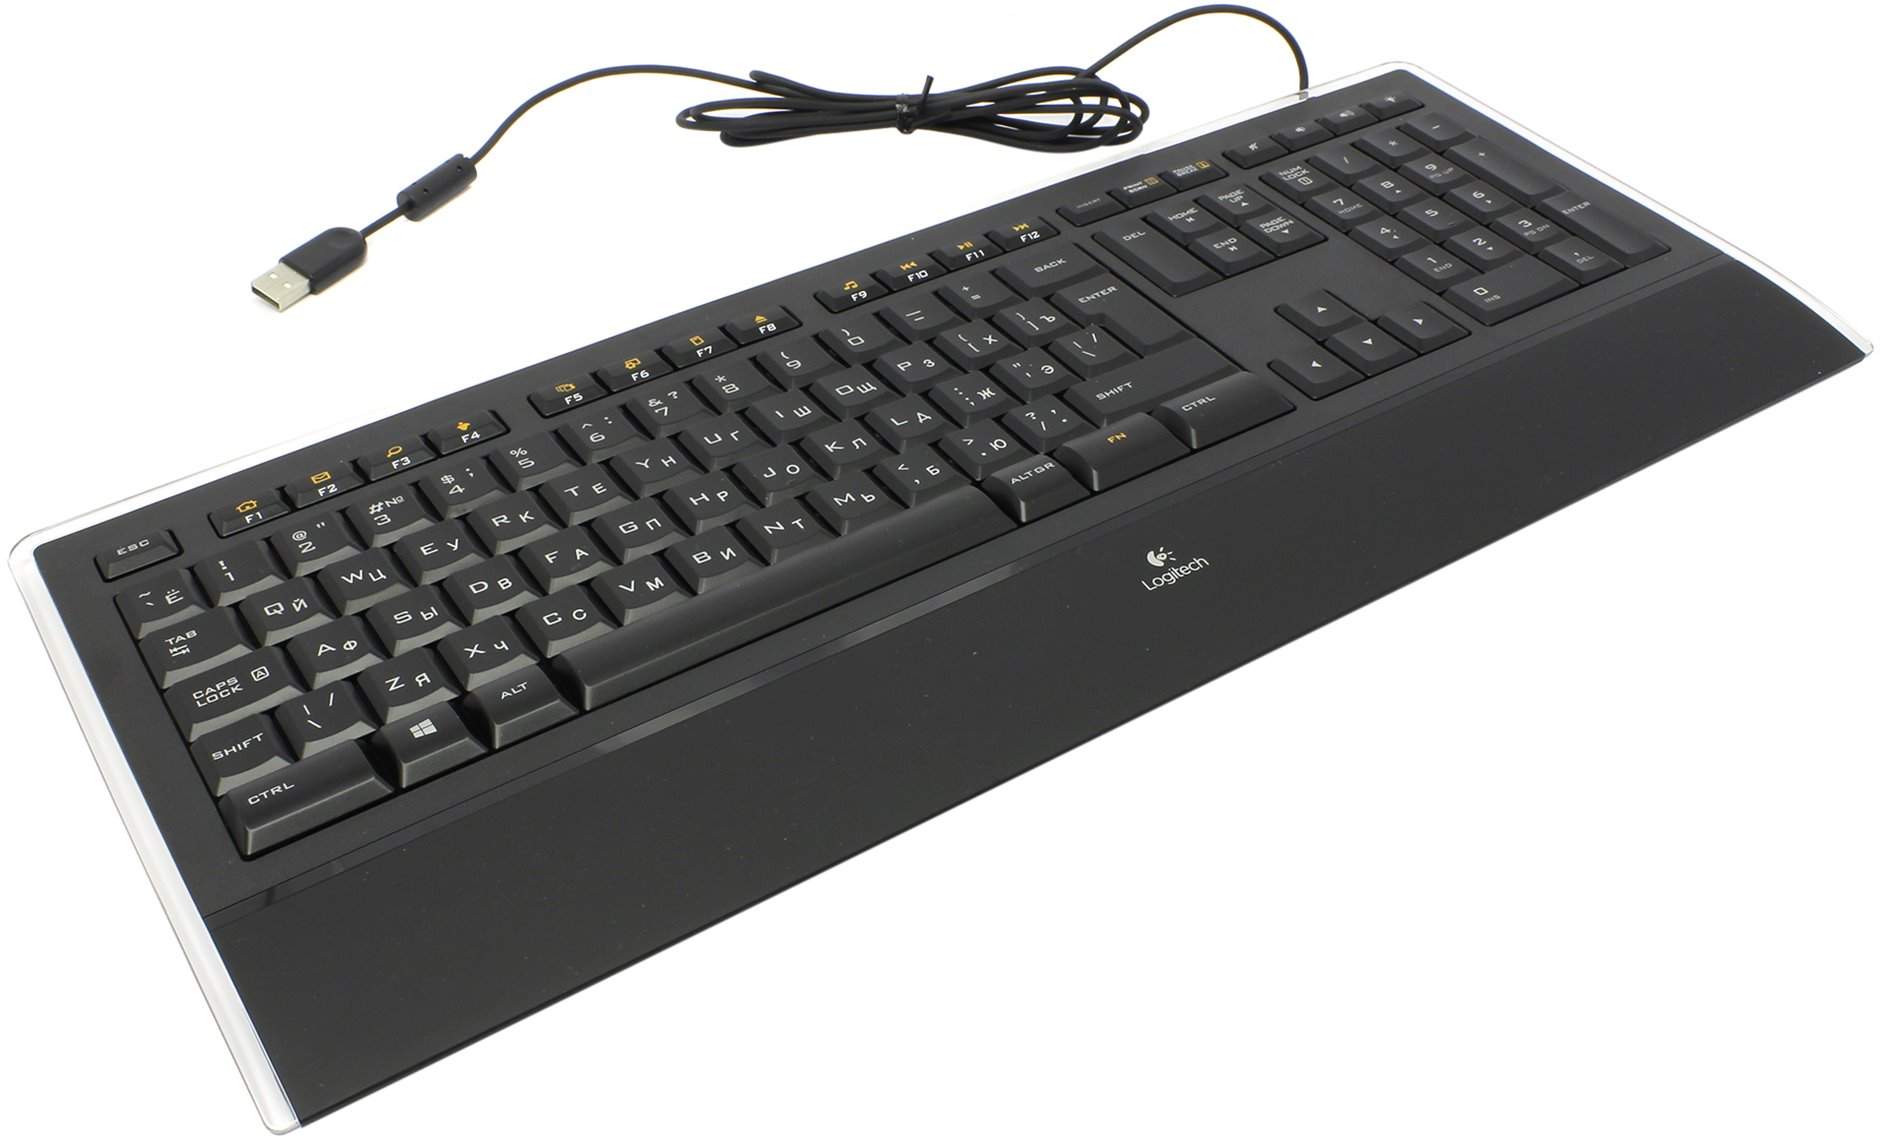 Logitech k740. Logitech k740 illuminated. Logitech illuminated Keyboard k740. Logitech illuminated Keyboard k740 Black. Logitech illuminated Keyboard k740 Black USB.